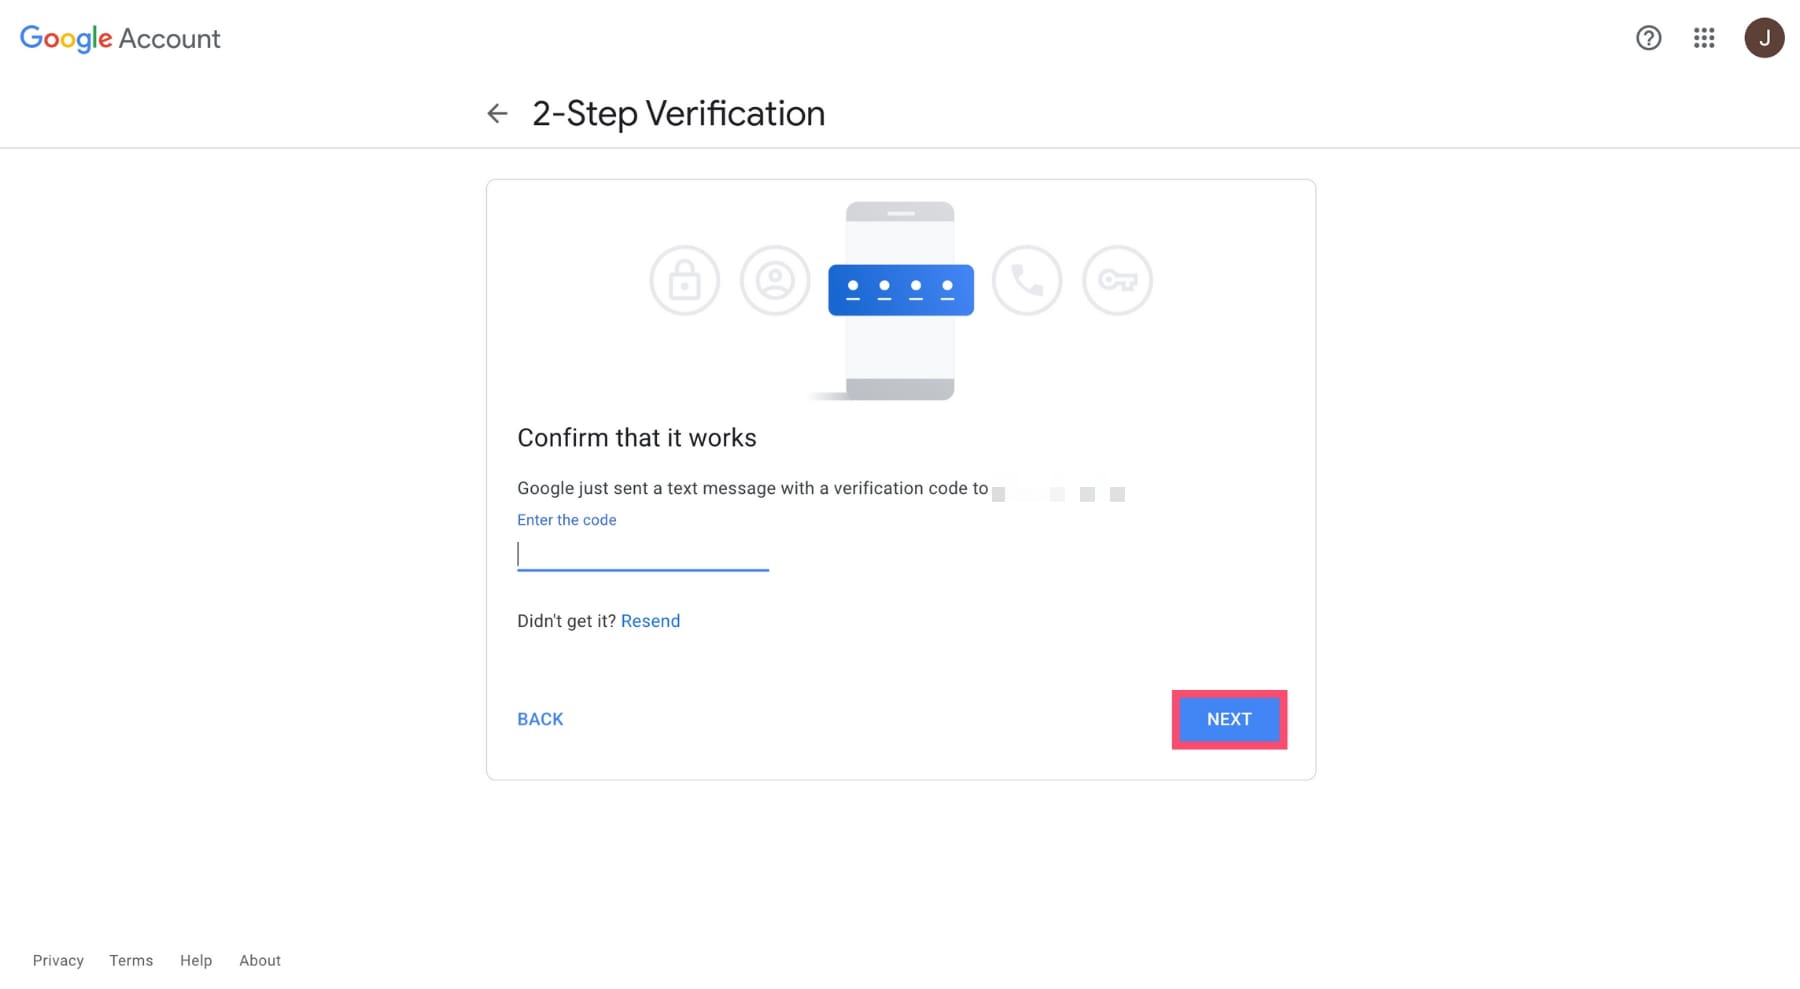 Google verification code